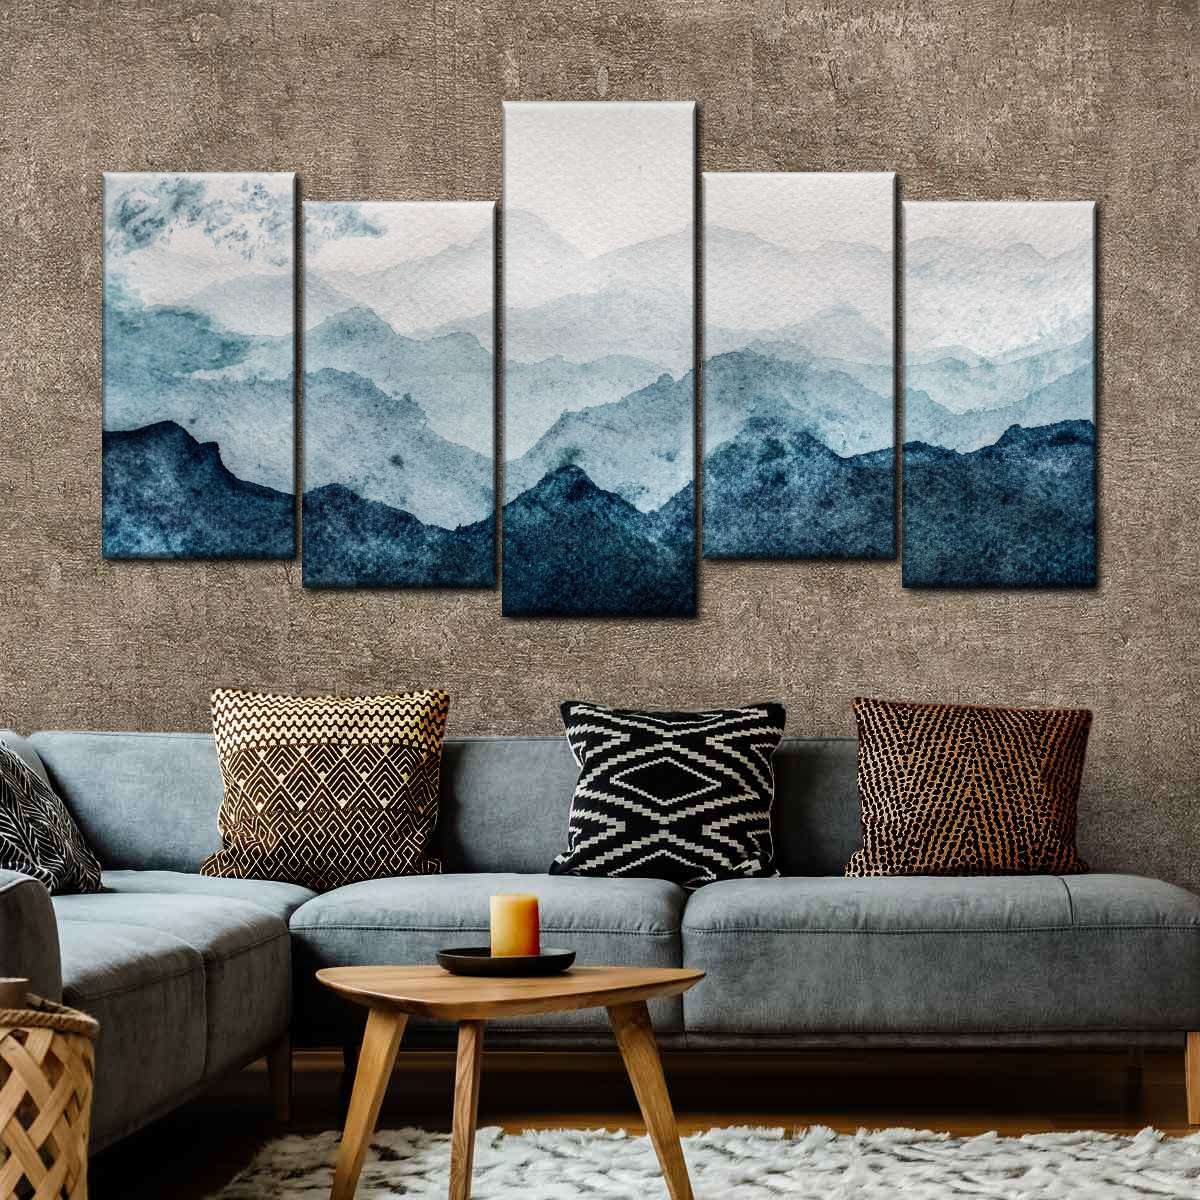 Japanese Mountain Landscape Abstract Wall Art: Canvas Prints, Art ...